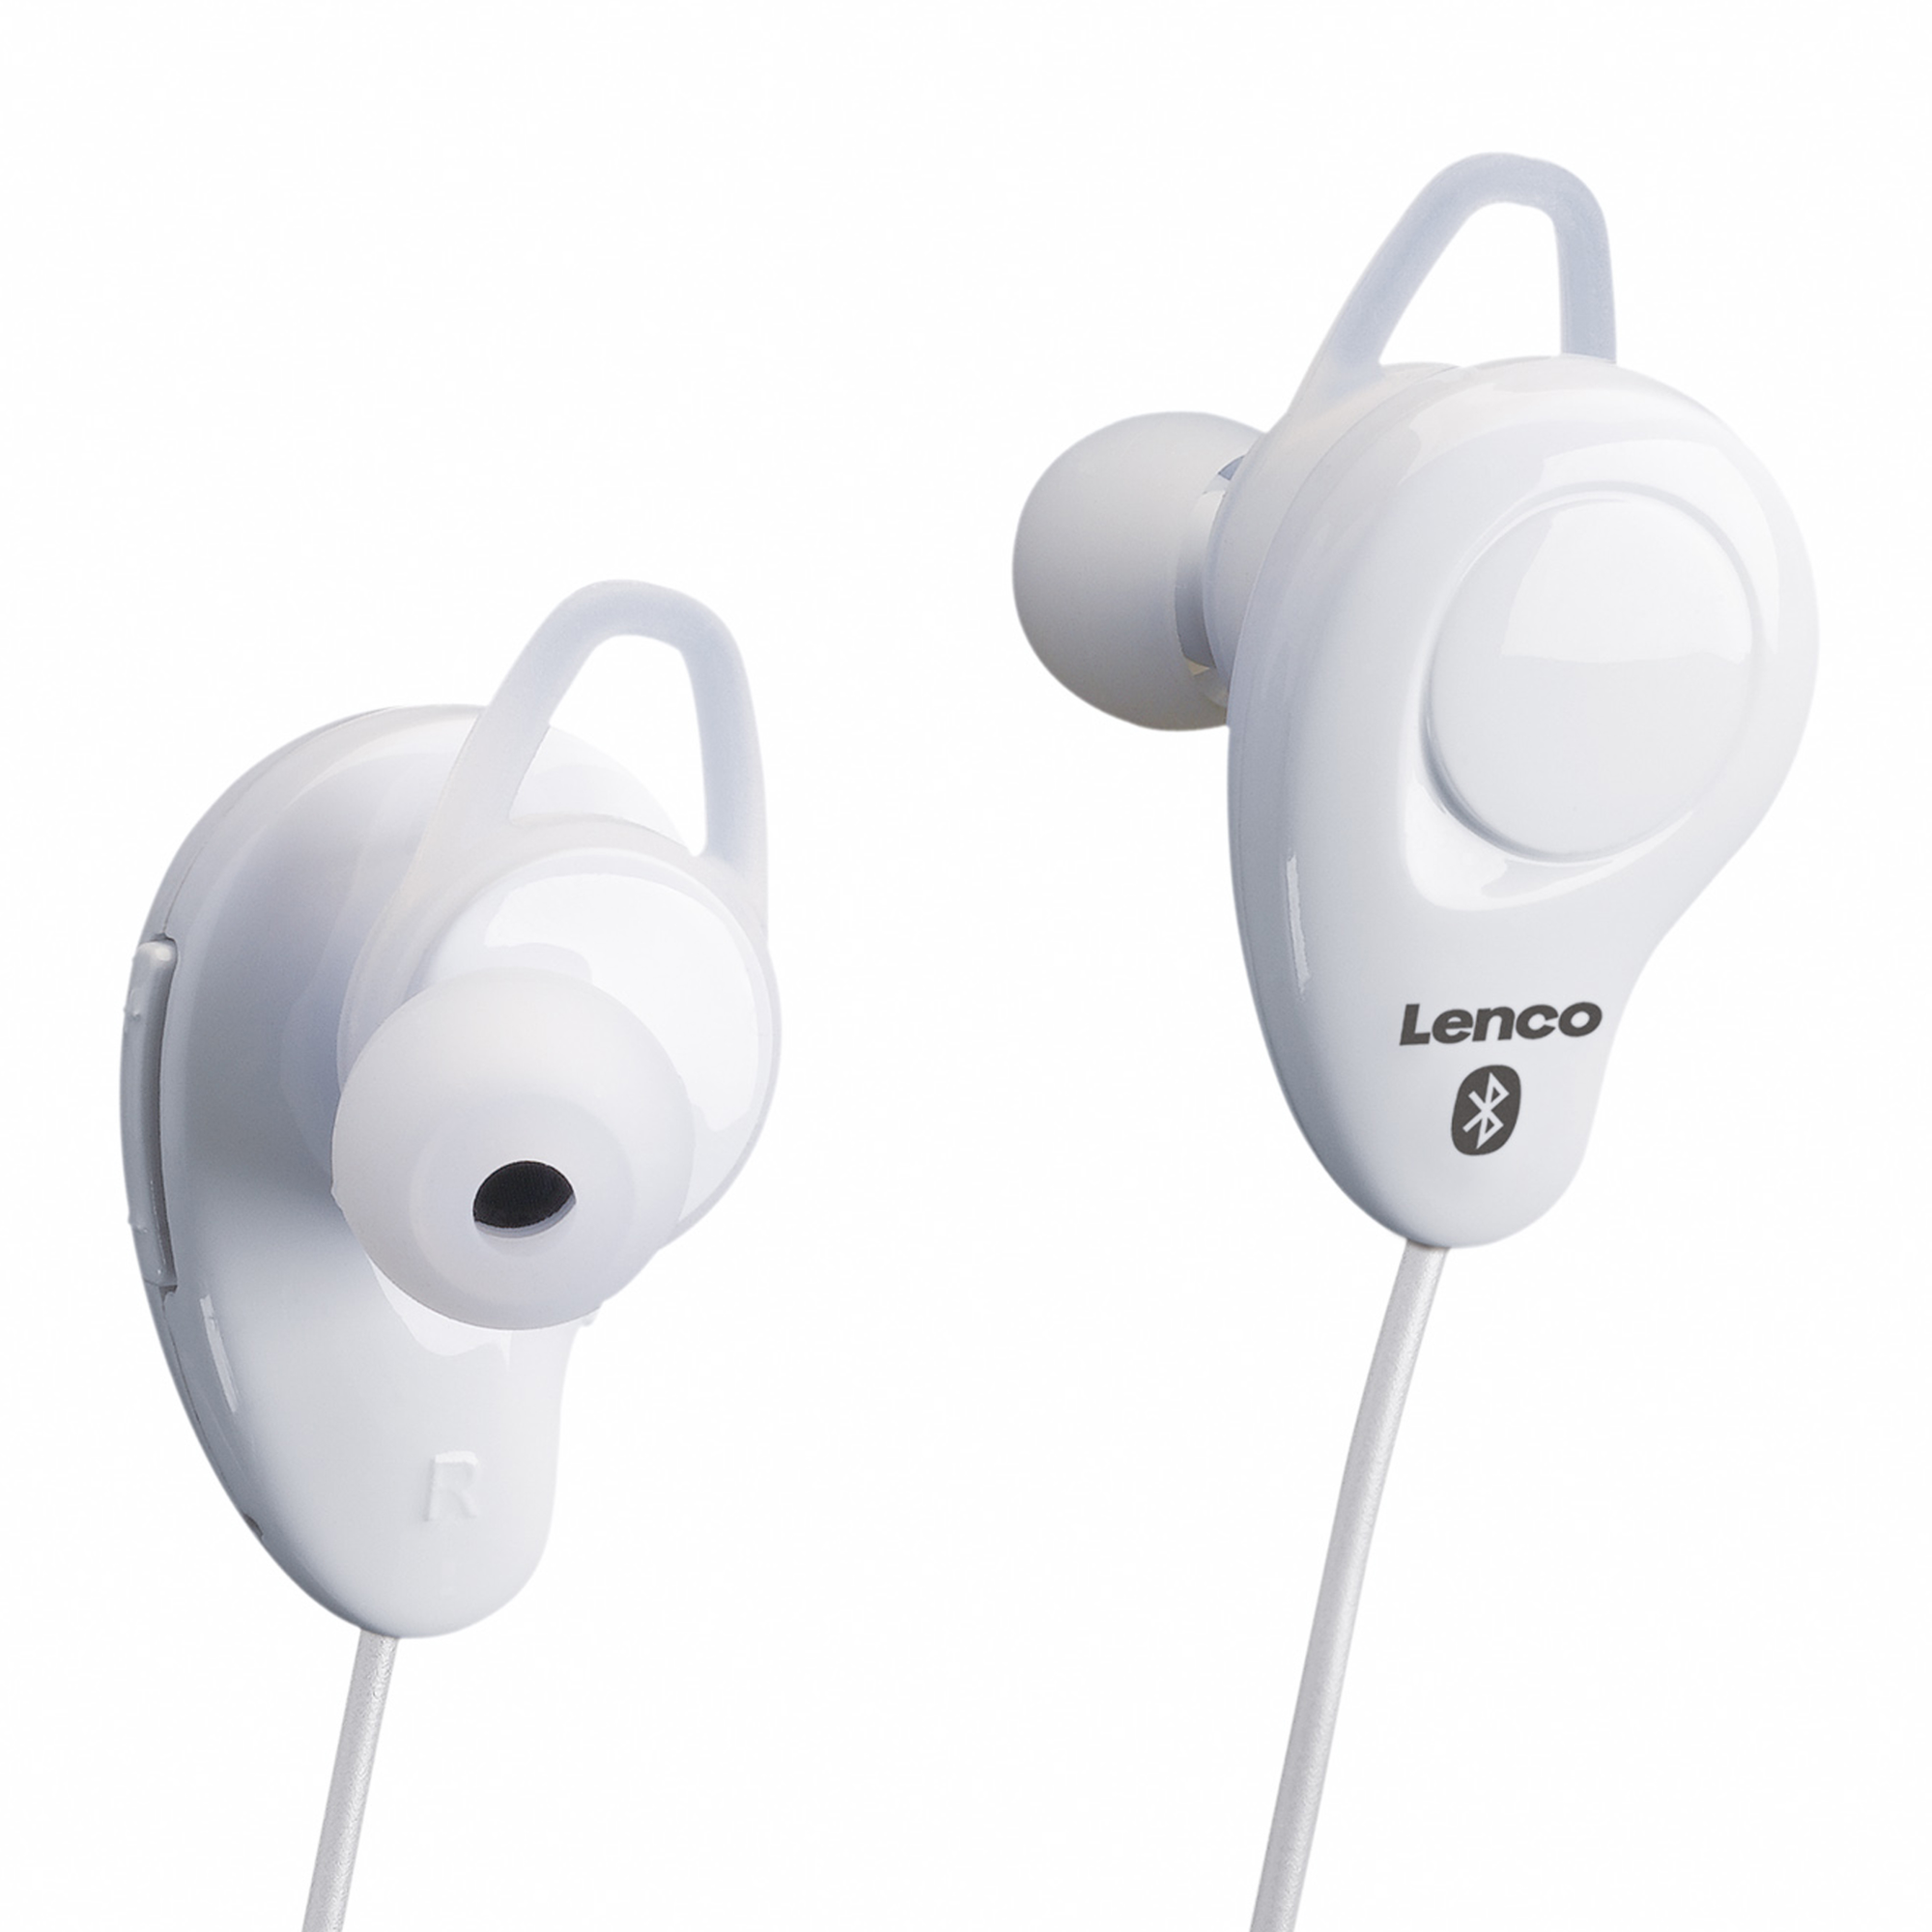 In-ear LENCO Weiß Bluetooth EPB-015WH, Headphone Bluetooth